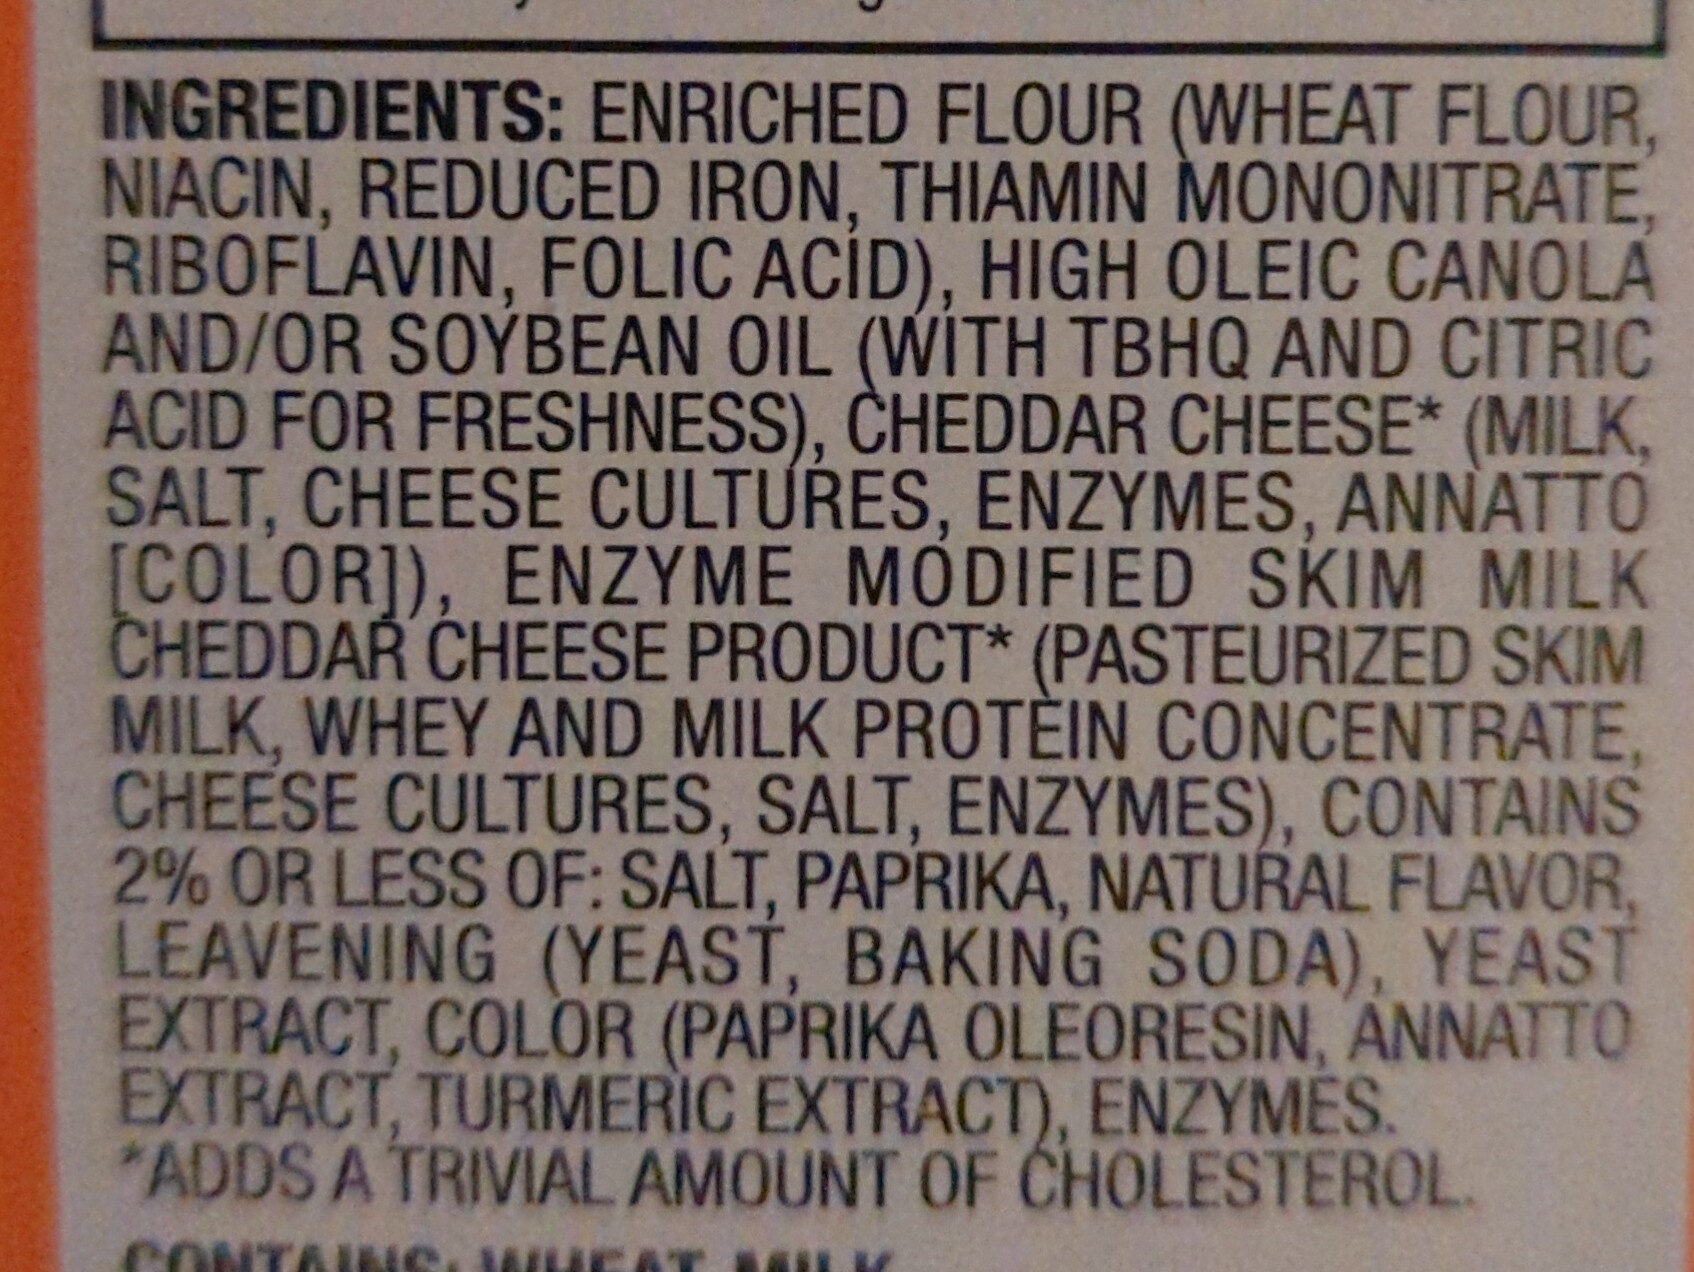 Cheesters crackers - Ingredients